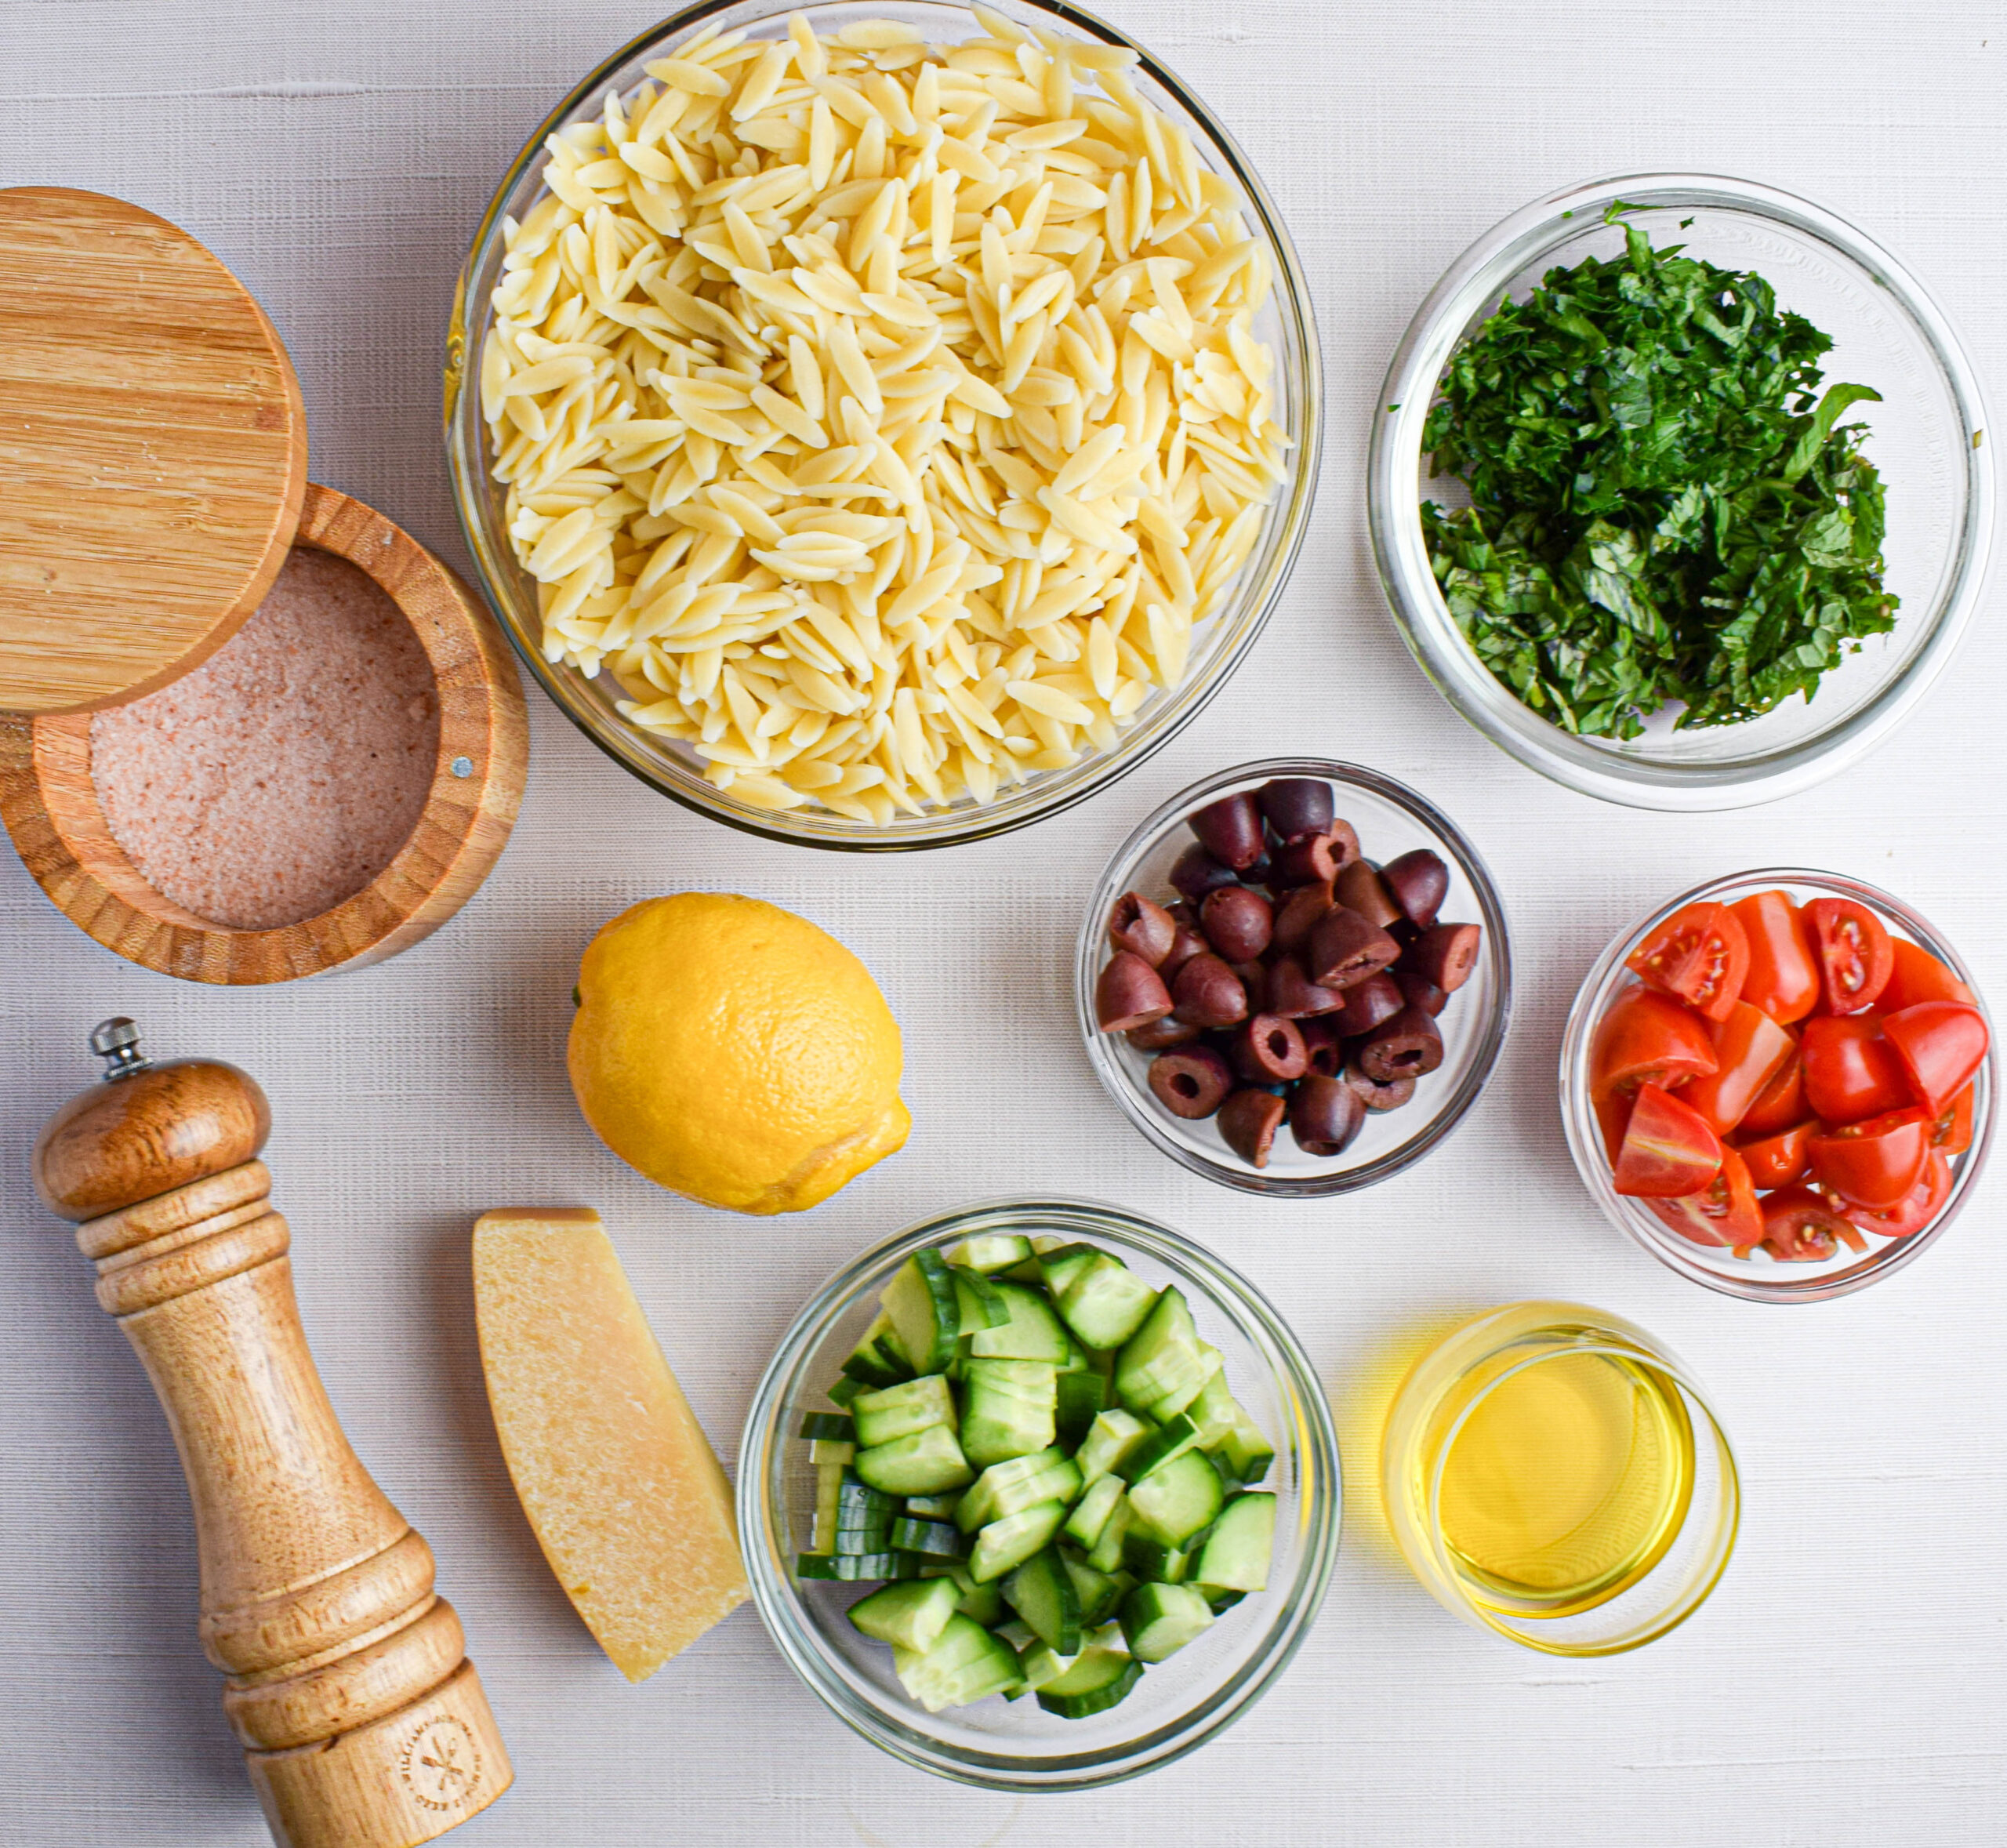 ingredients for lemon orzo salad: orzo, kalamata olives, basil, mint, parsley, cherry tomatoes, cucumber, olive oil, lemon, salt and pepper